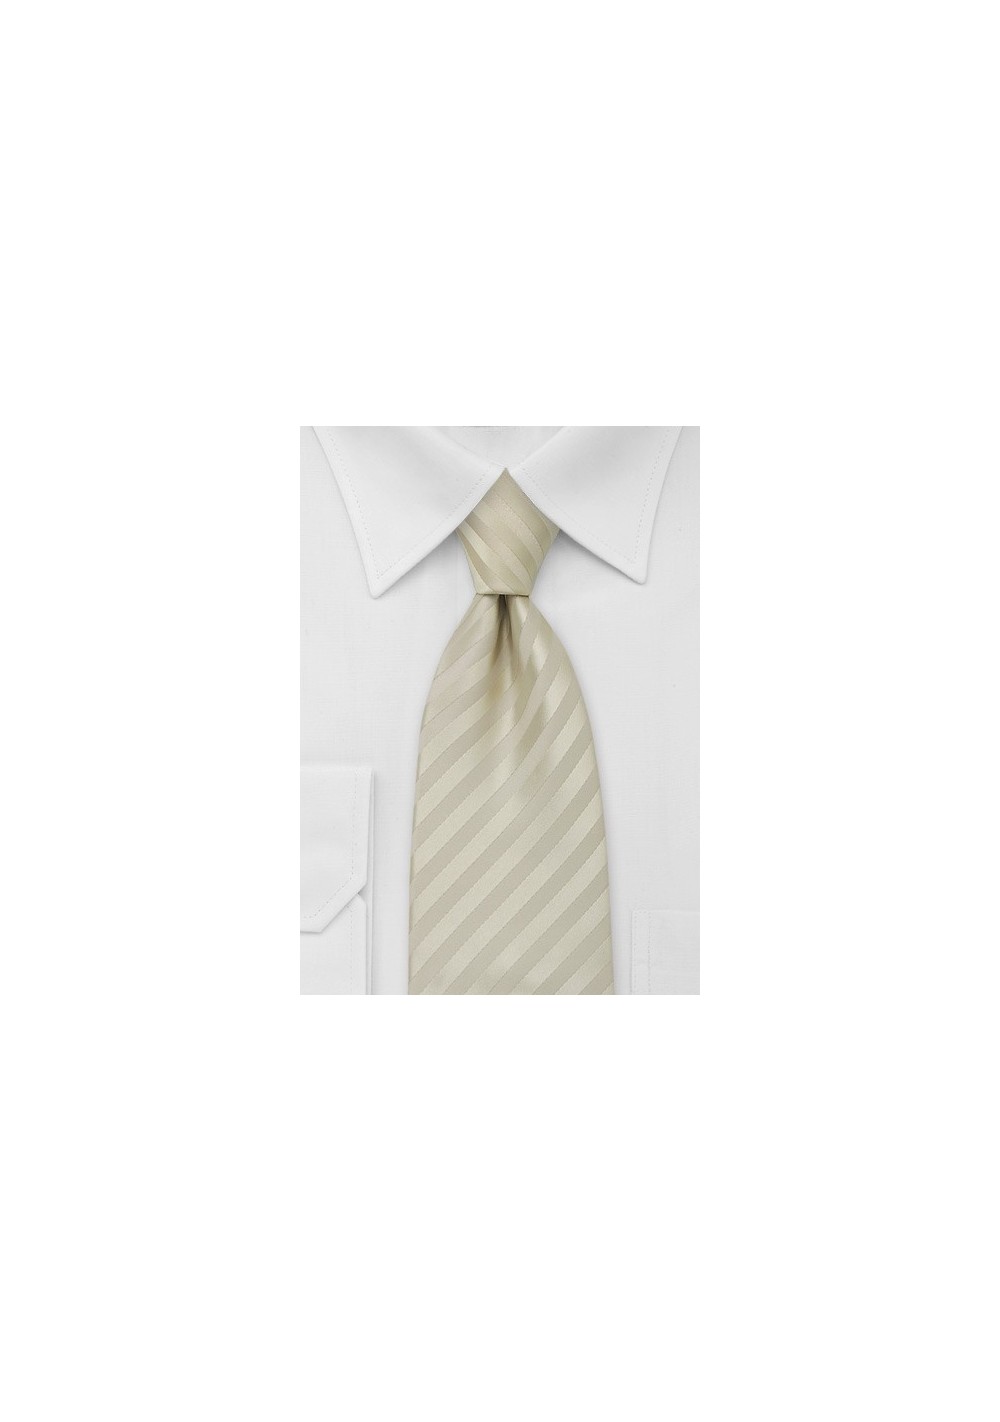 Extra Long Tie in Vanilla-Yellow